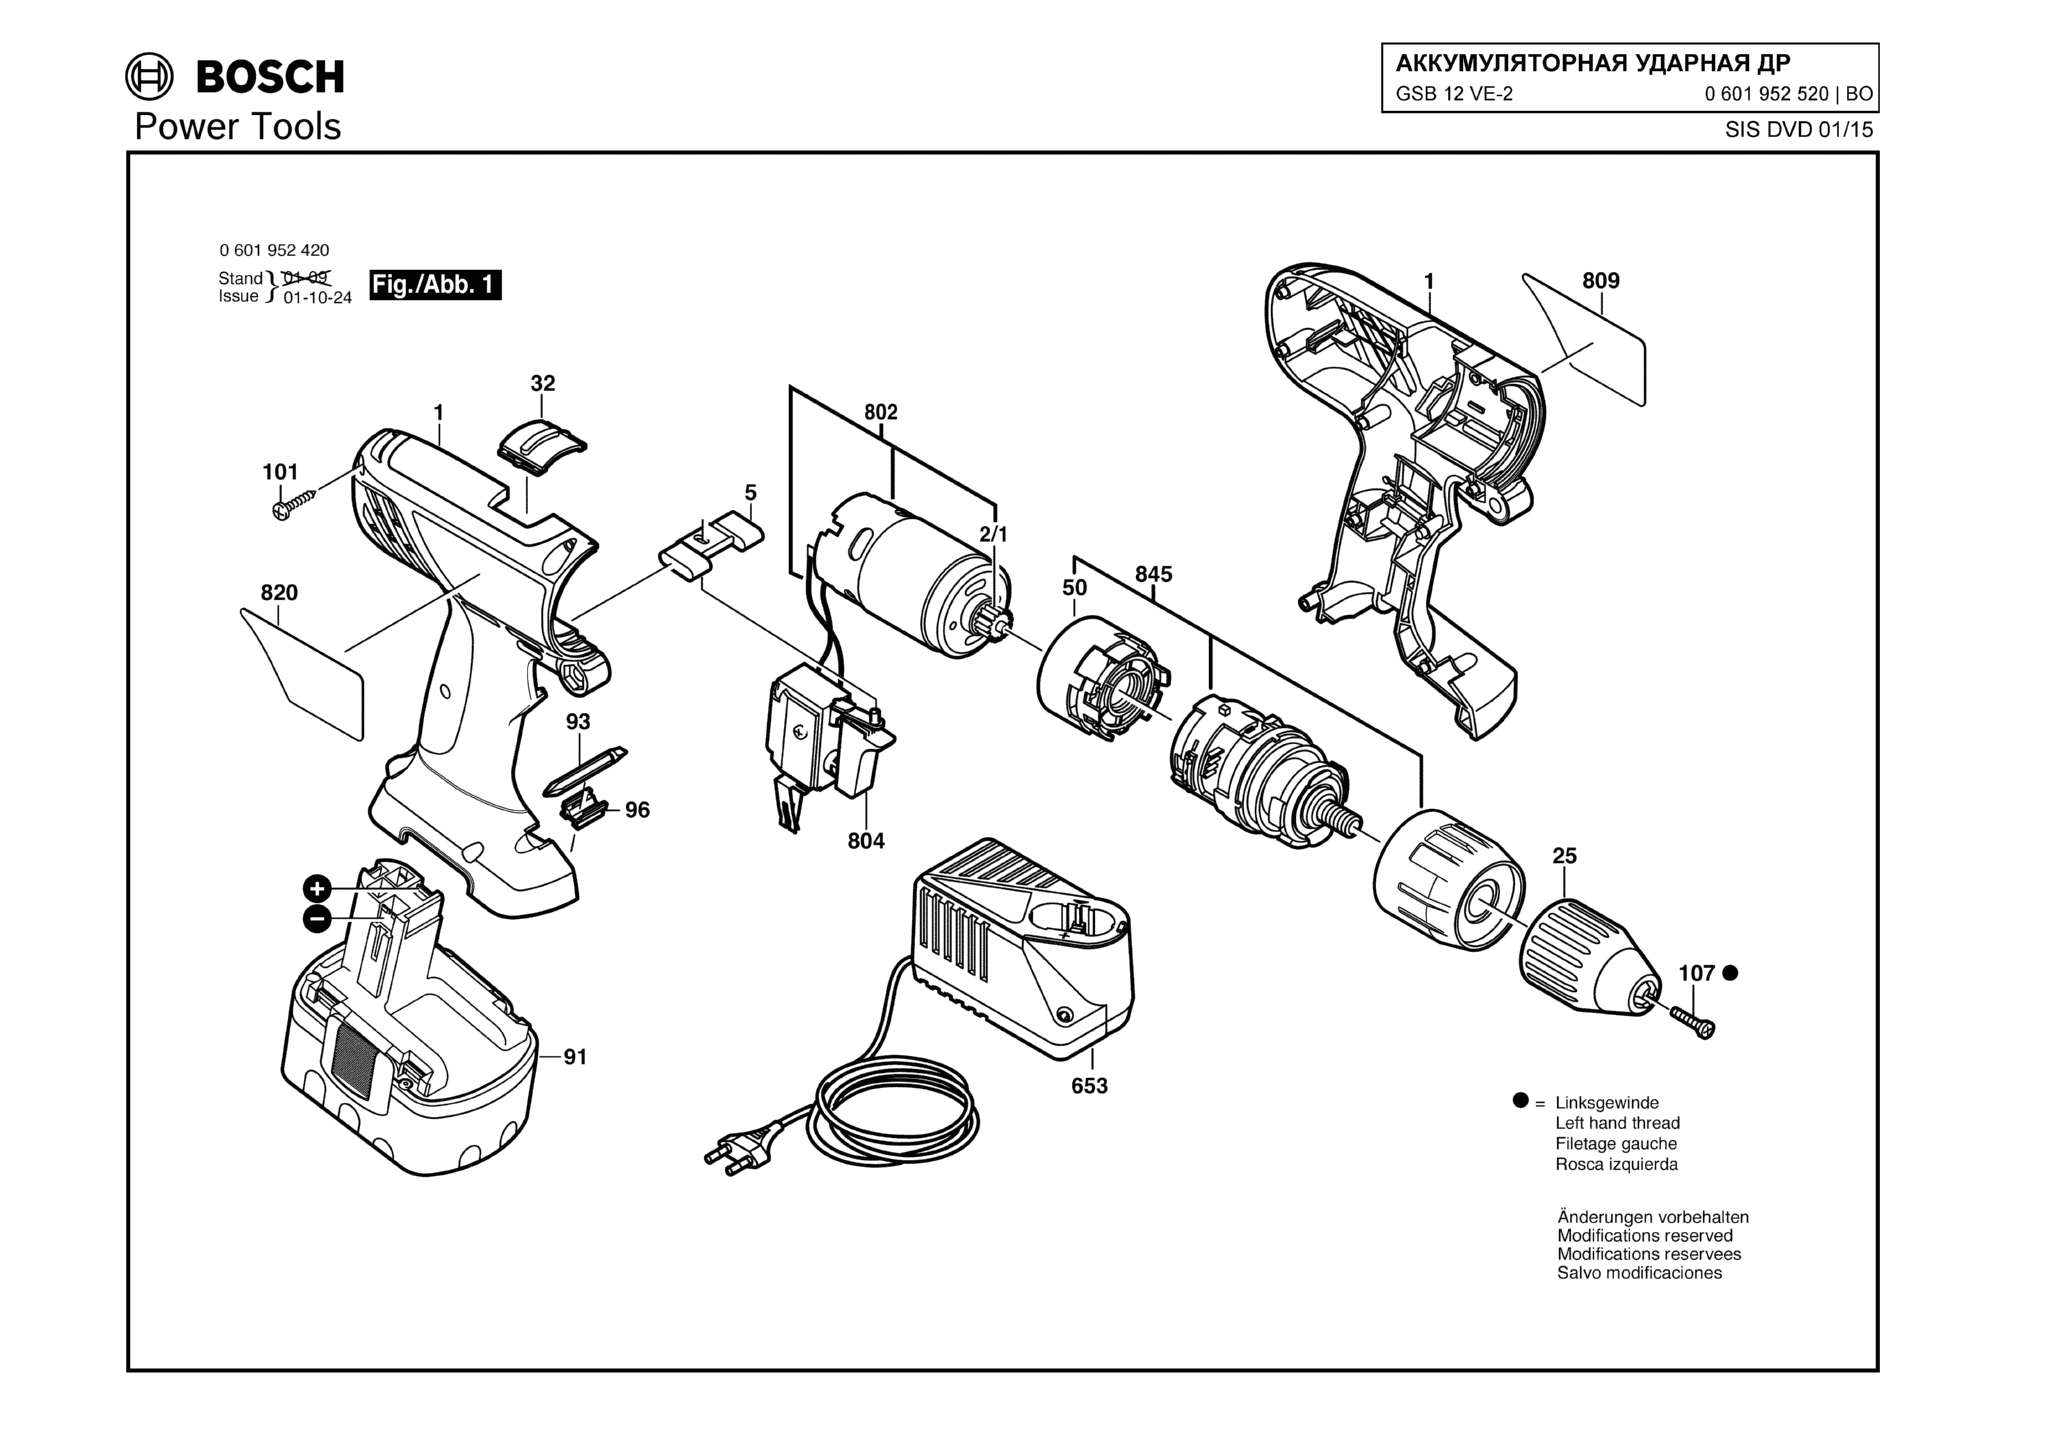 Запчасти, схема и деталировка Bosch GSB 12 VE-2 (ТИП 0601952520)